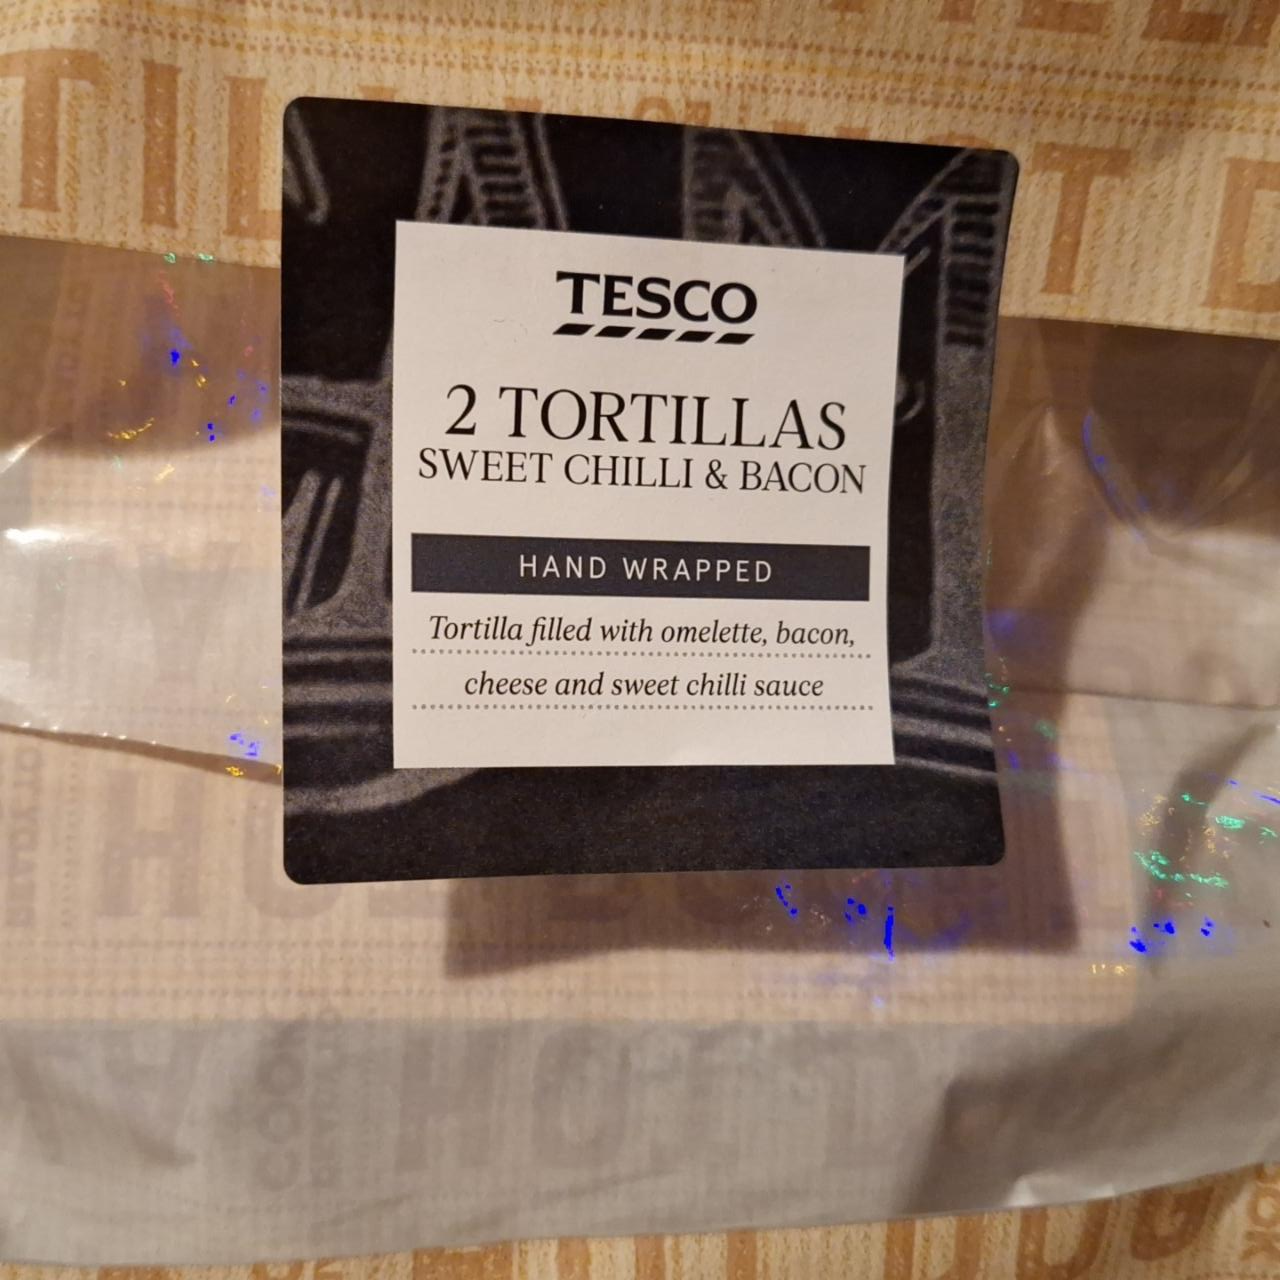 Képek - 2 Tortillas sweet chilli & bacon Tesco